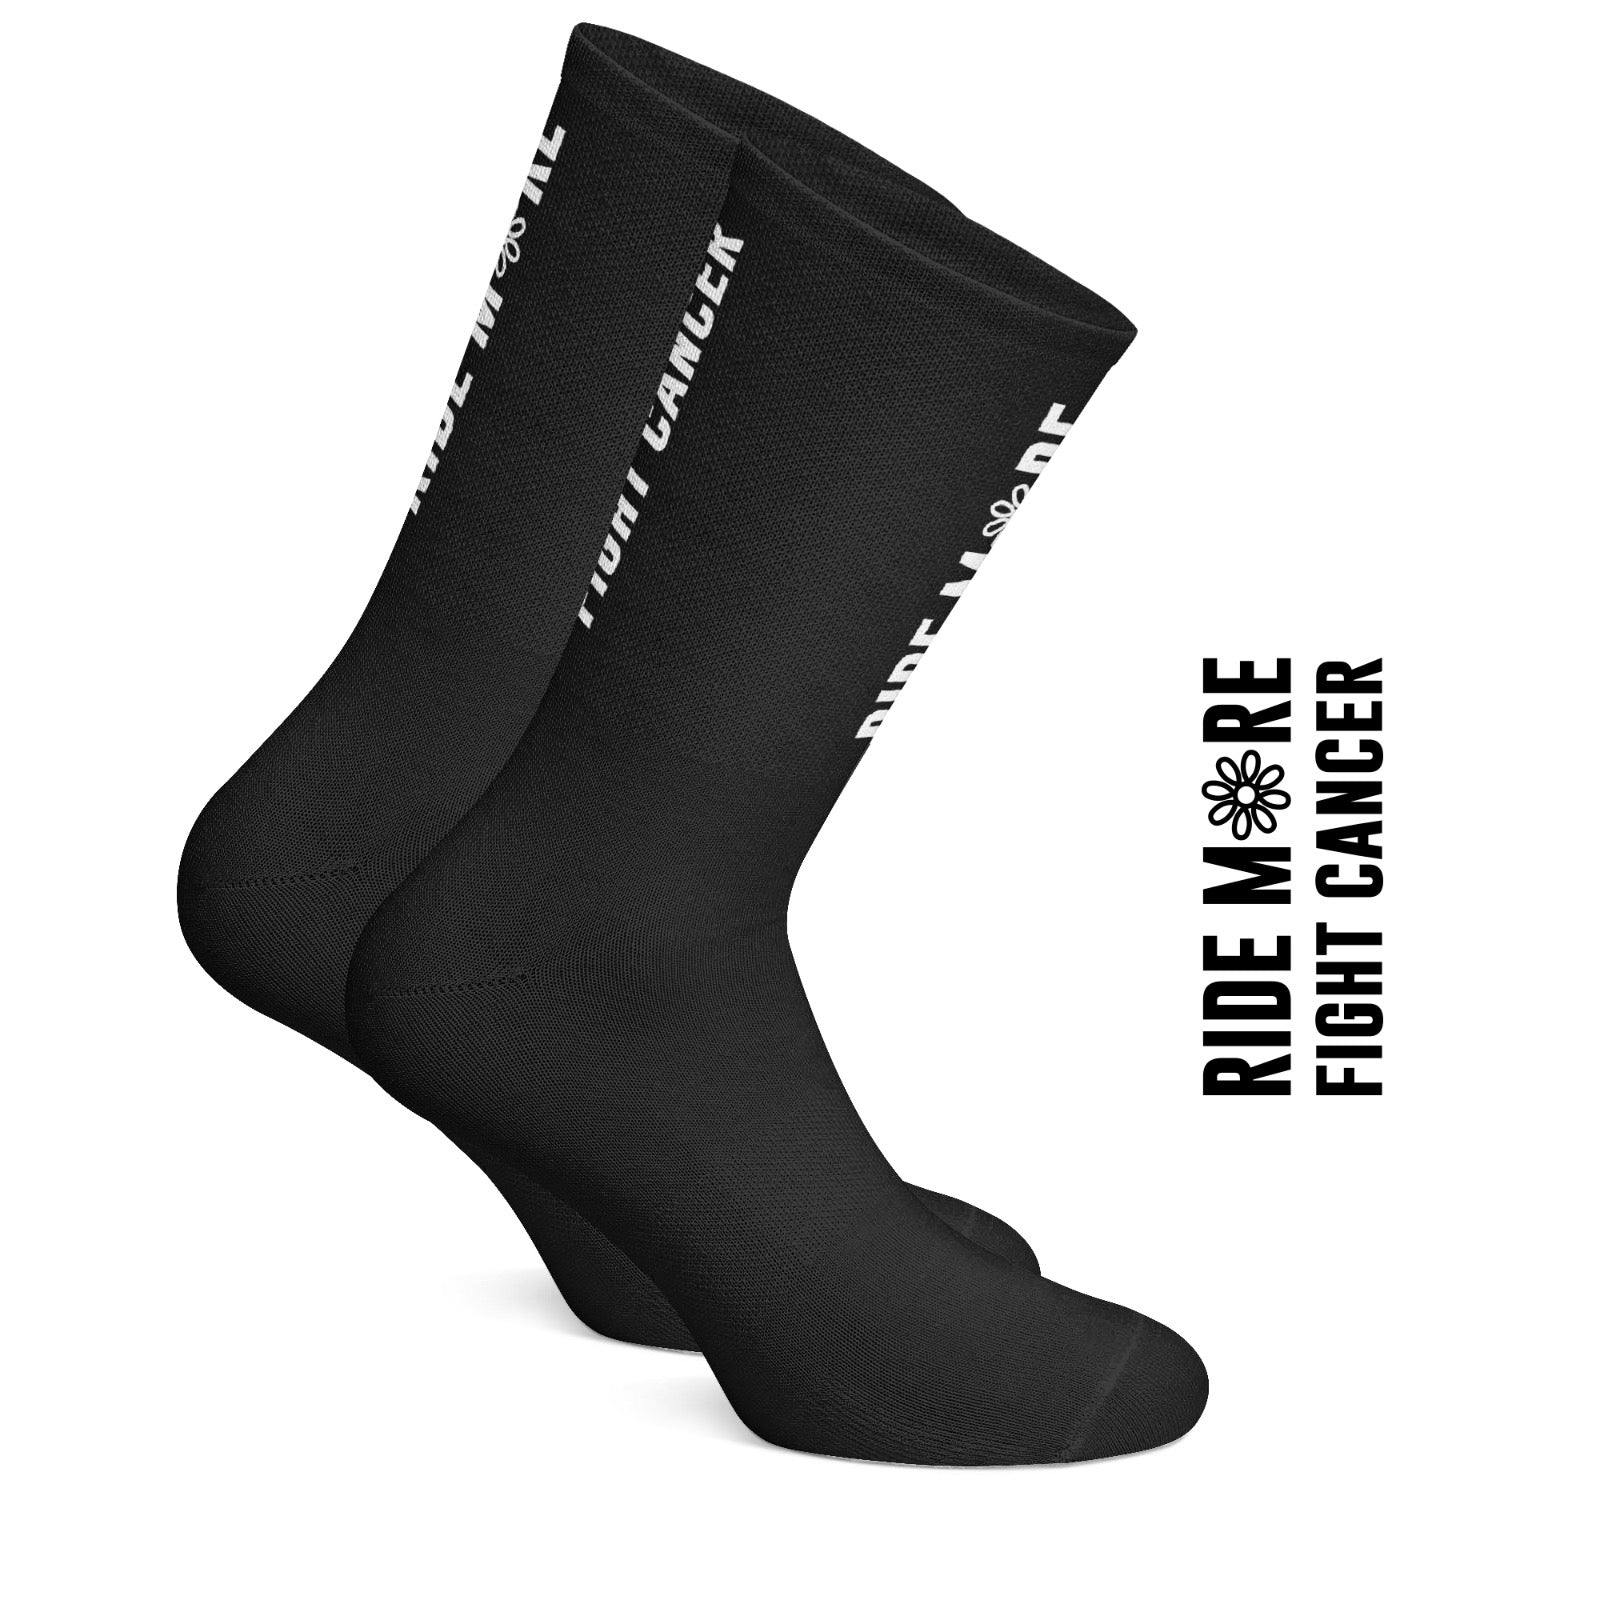 Fight Cancer Cycling Socks - Black